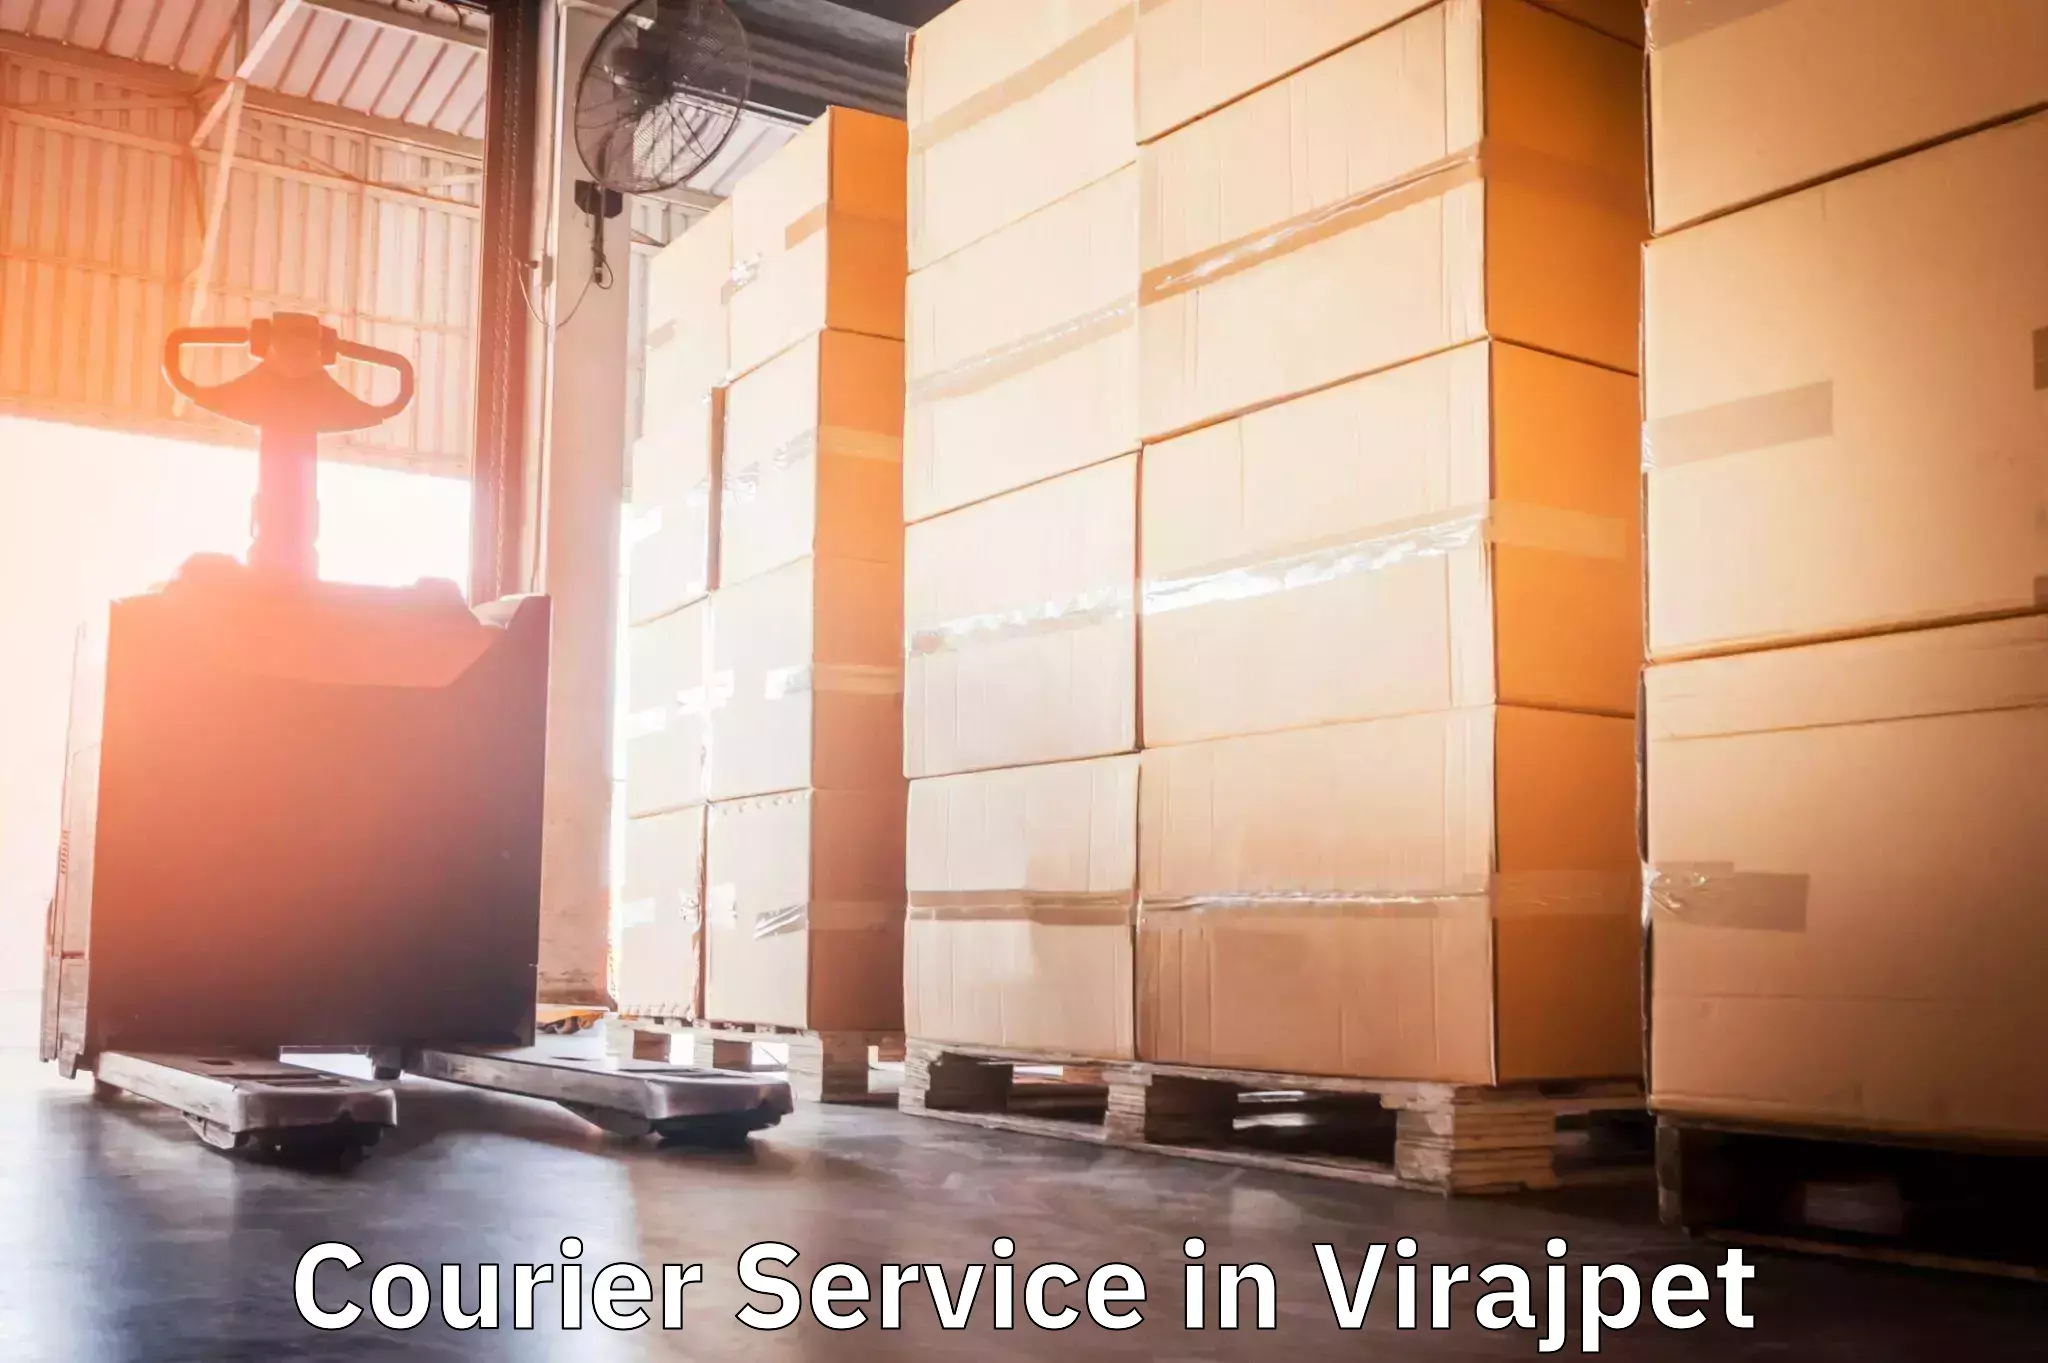 Next-generation courier services in Virajpet